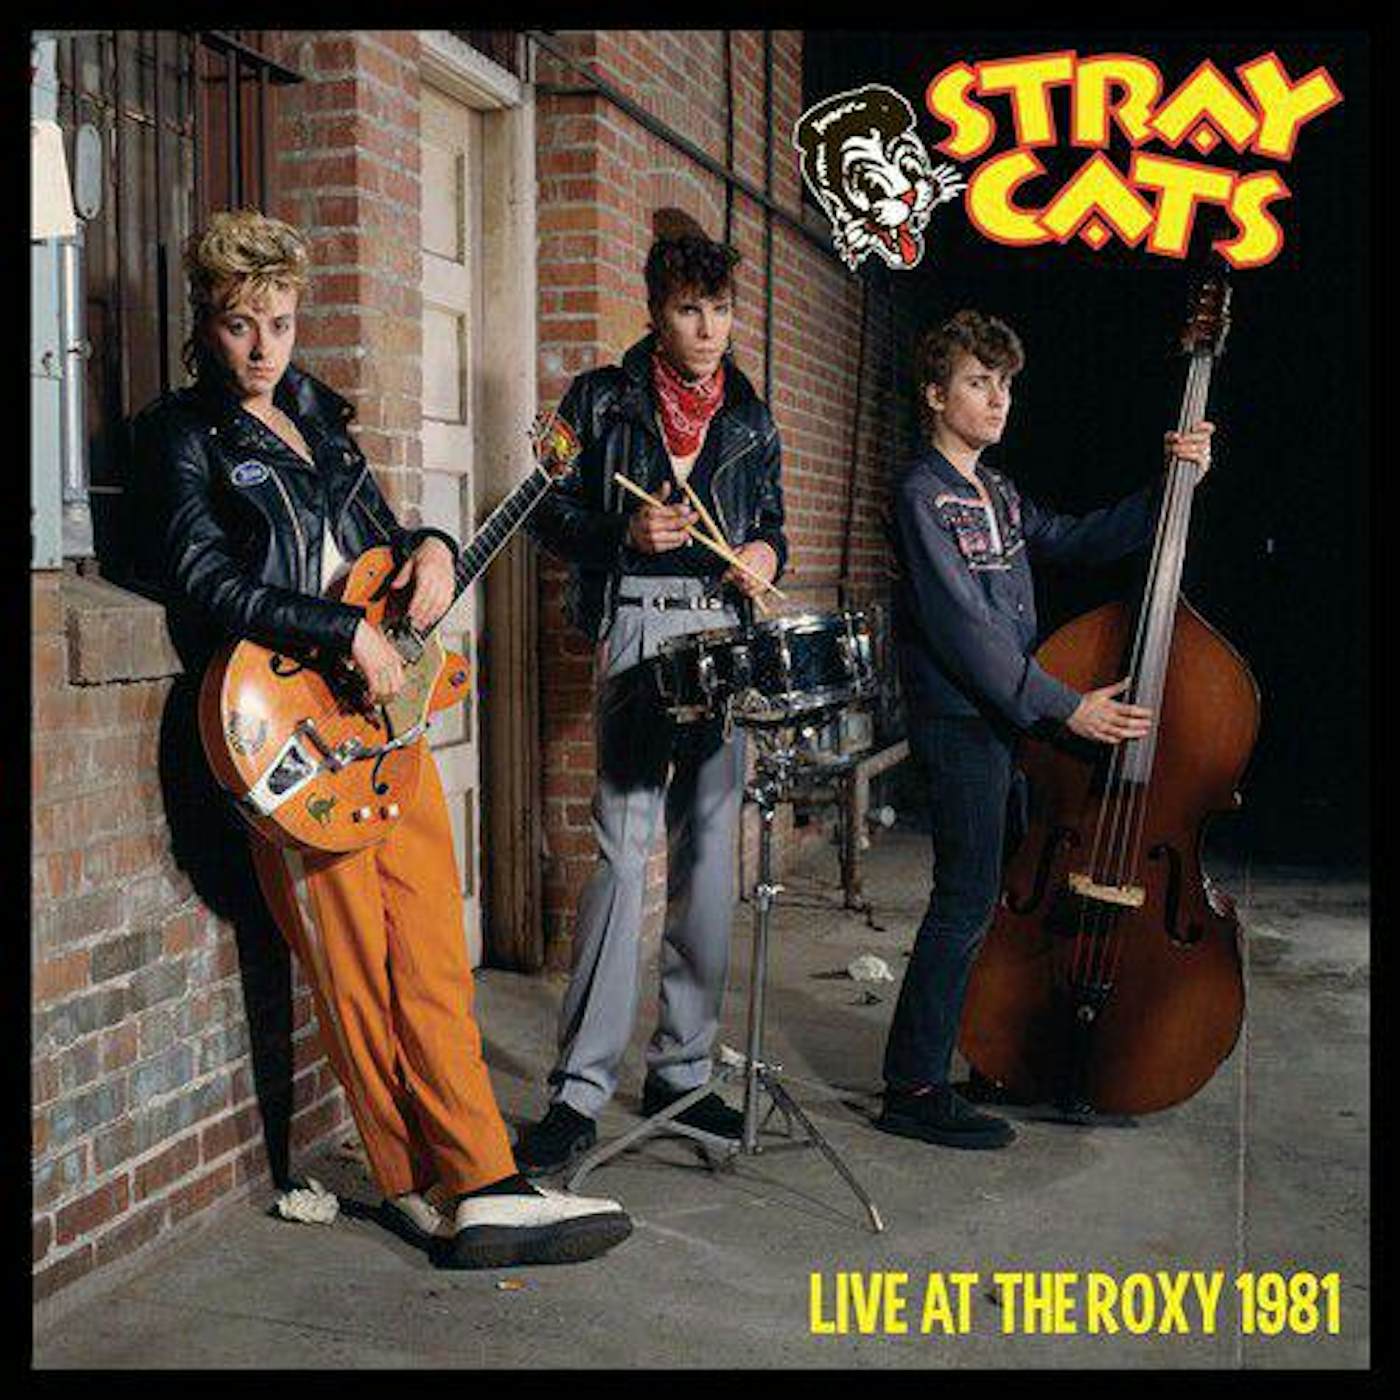 Stray Cats Live At The Roxy 1981 (gold/black splatter vinyl) vinyl record